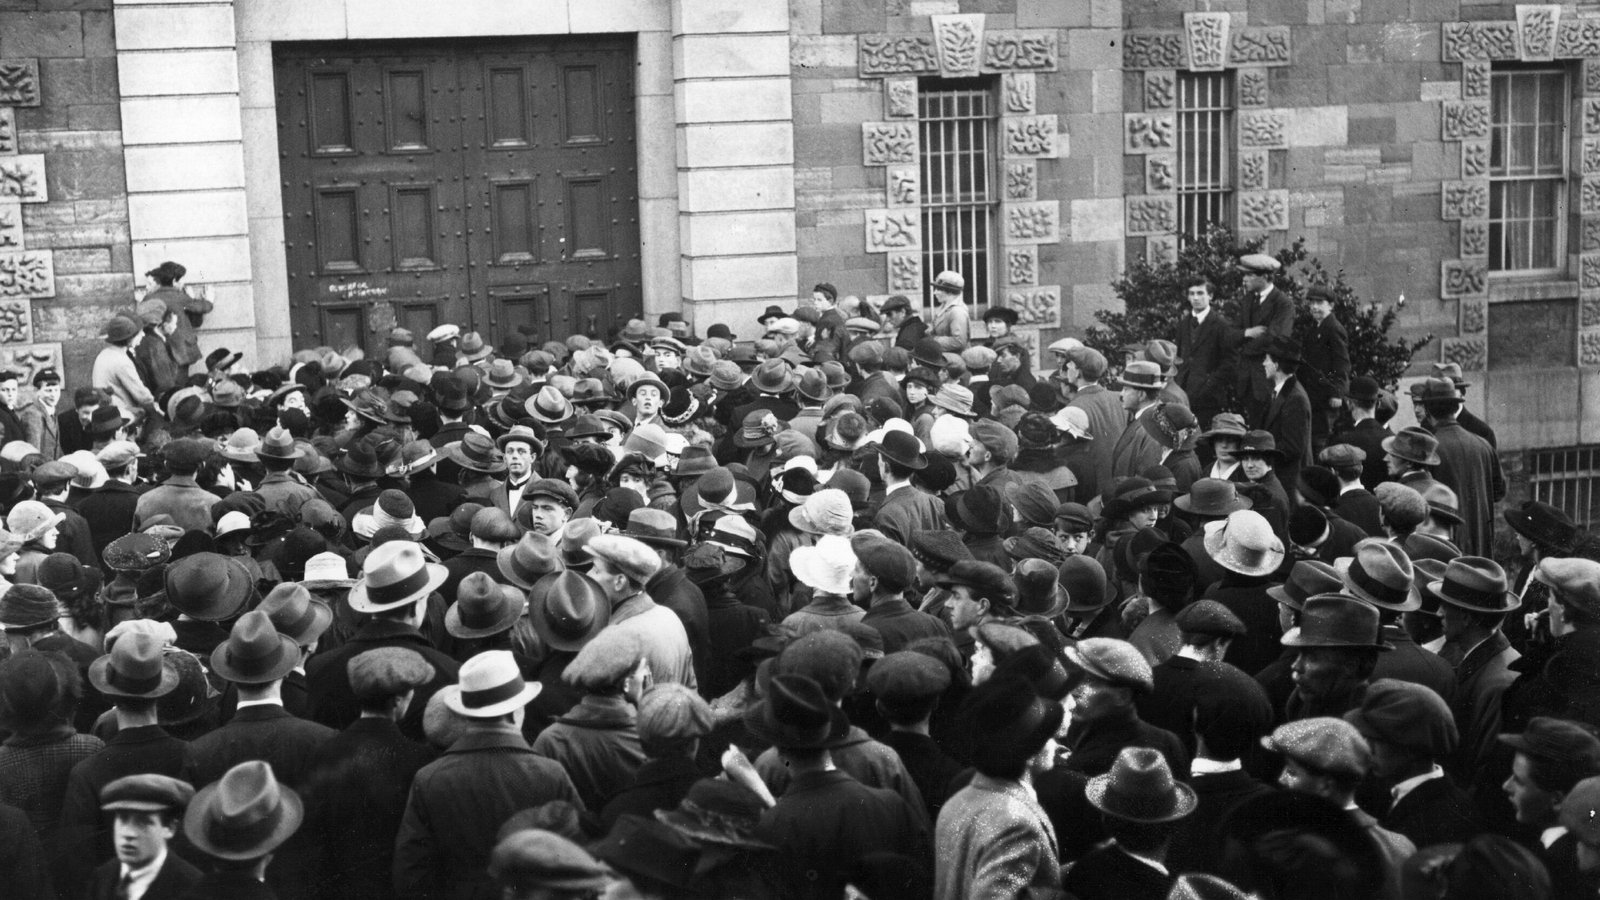 Image - A scene outside Mountjoy Prison on 1 November 1920